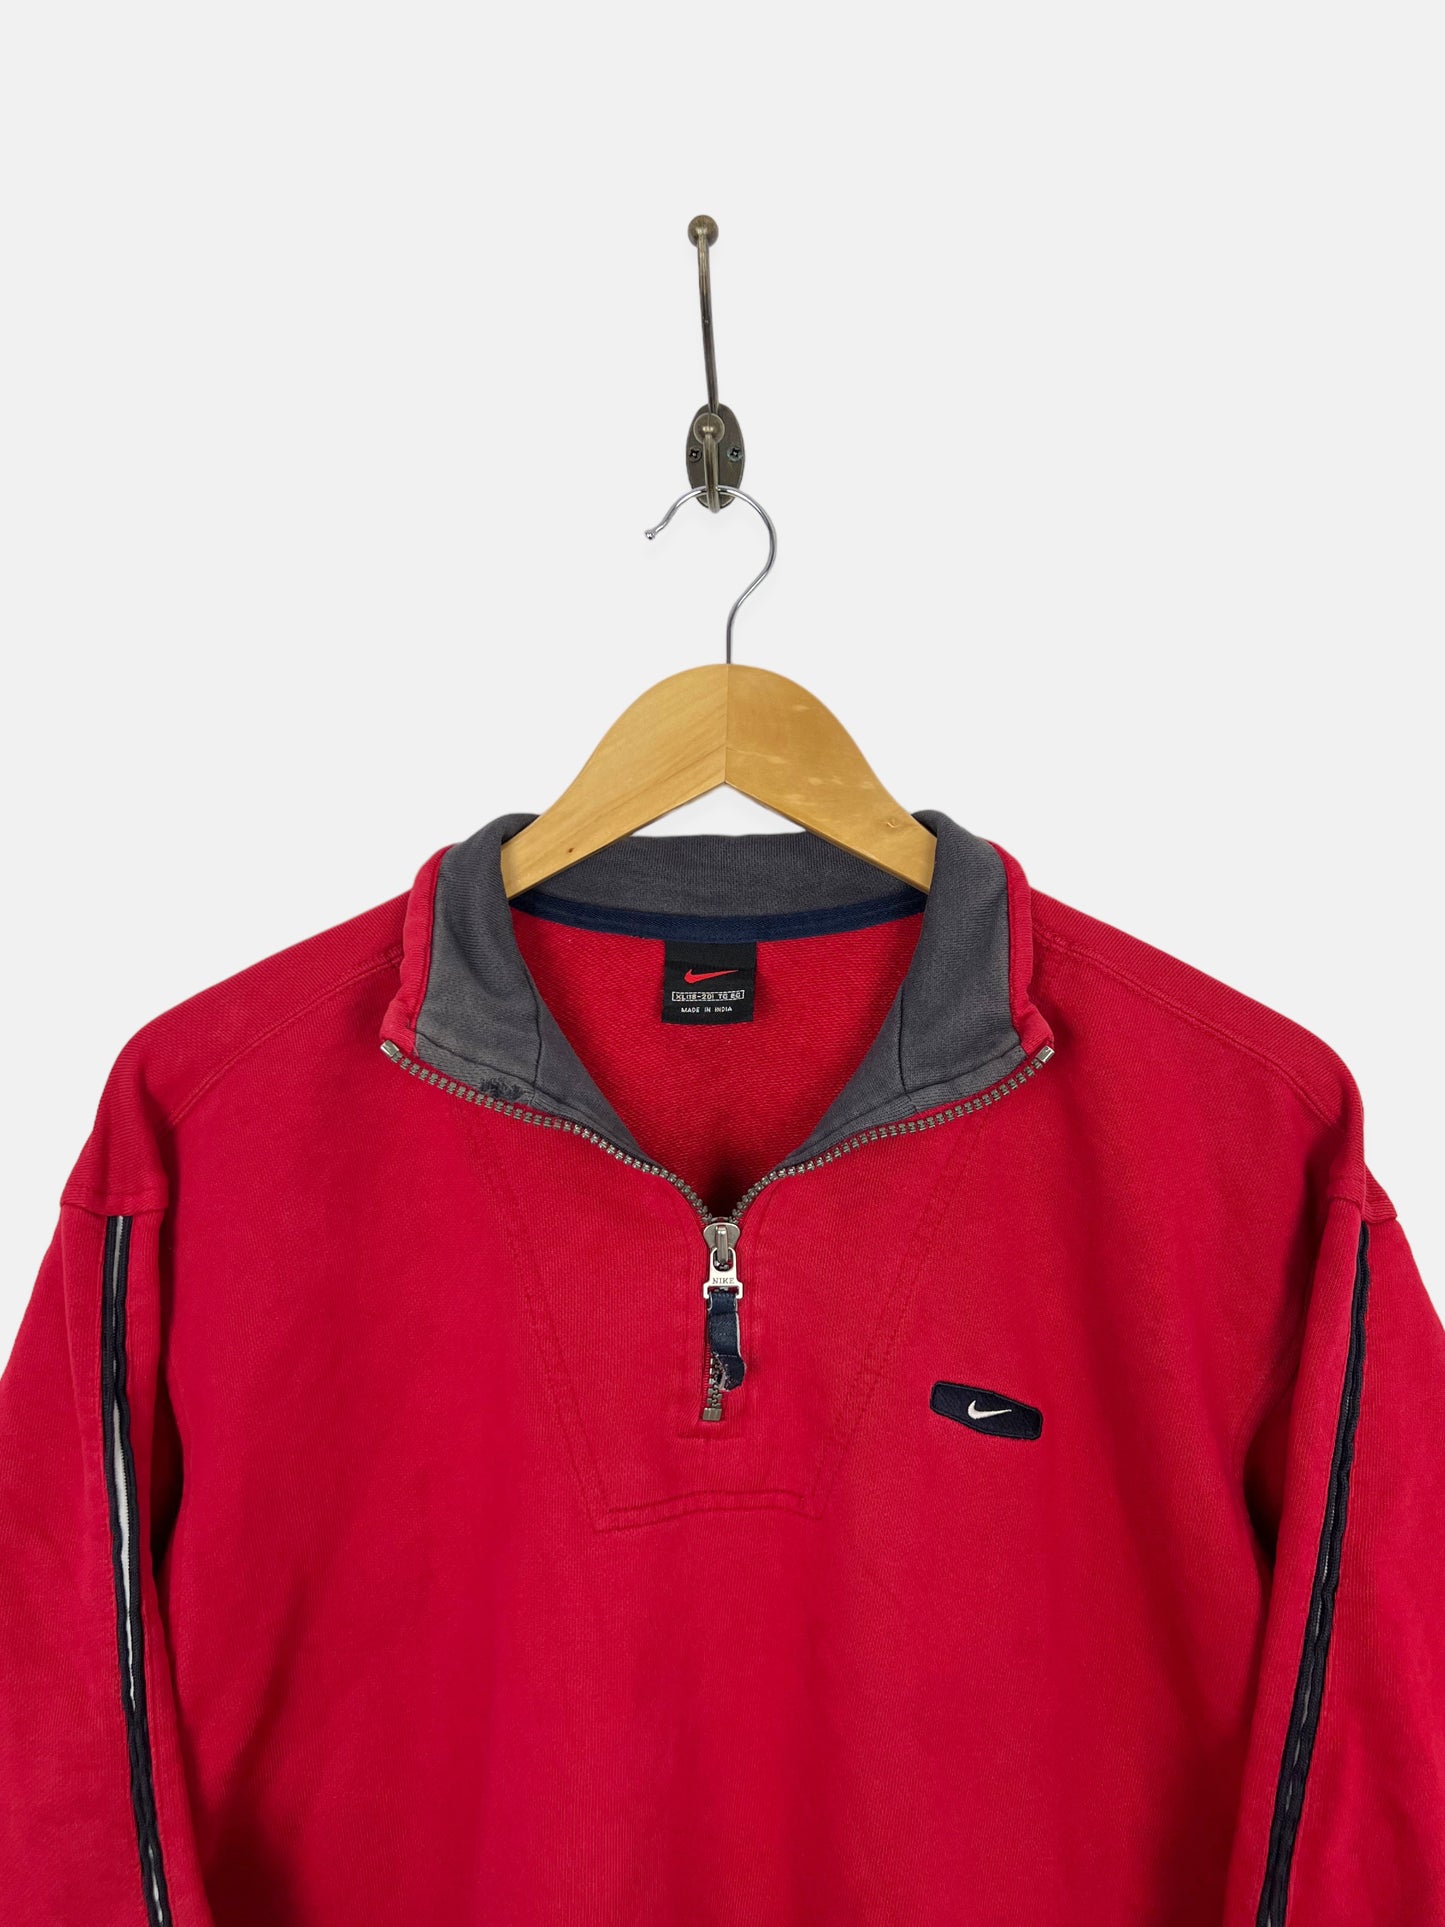 90's Nike Embroidered Vintage Quarterzip Sweatshirt Size 8